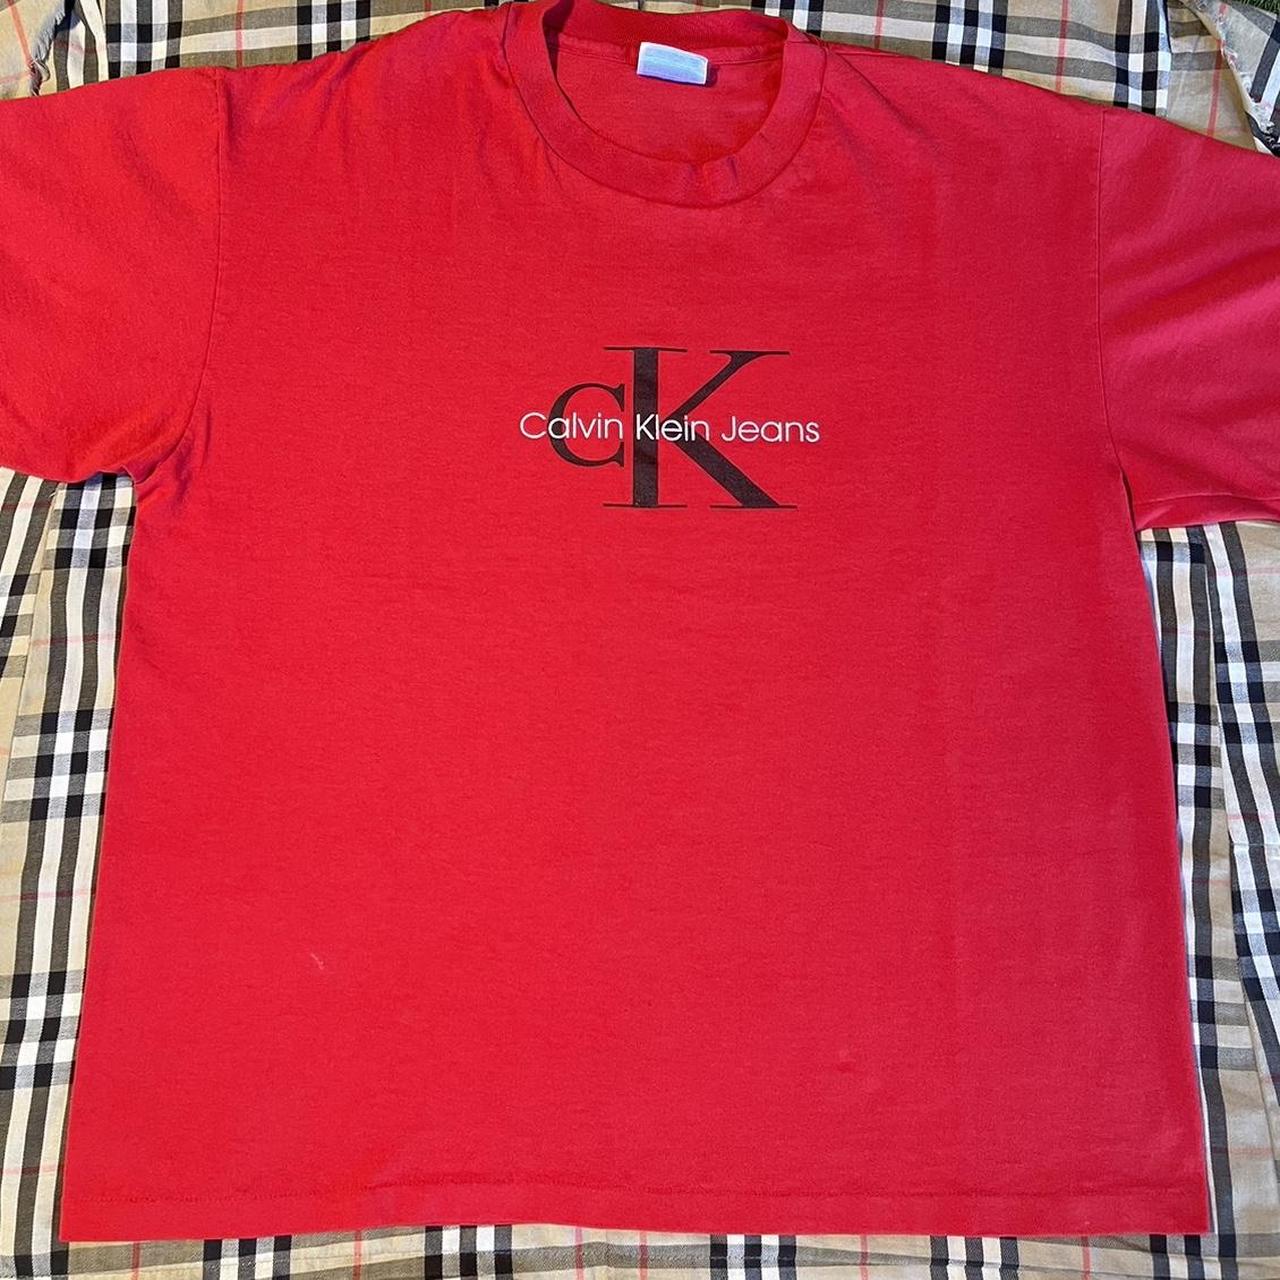 Calvin Klein Jeans Men's Red and Black T-shirt | Depop